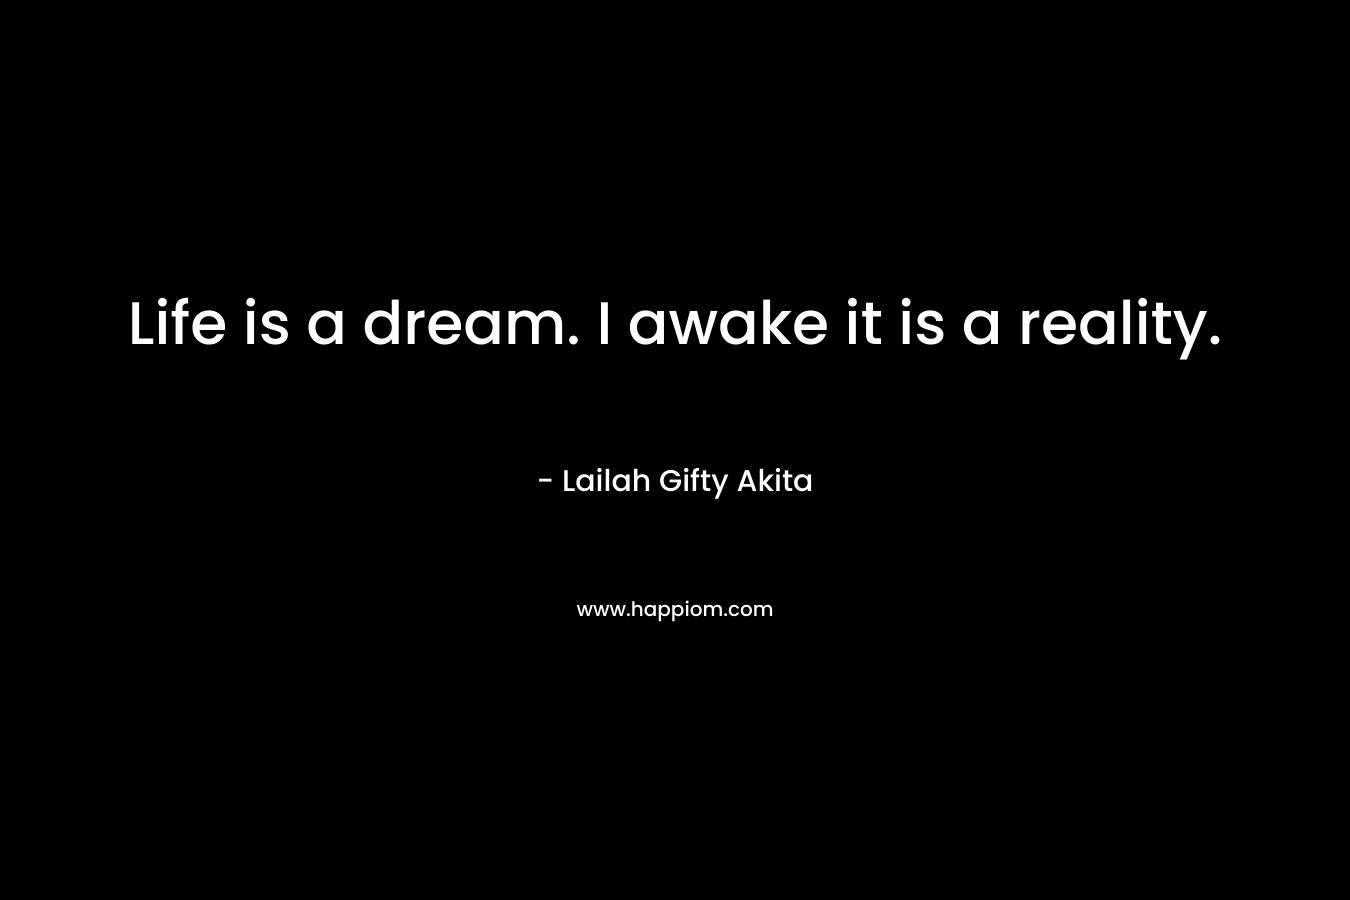 Life is a dream. I awake it is a reality.